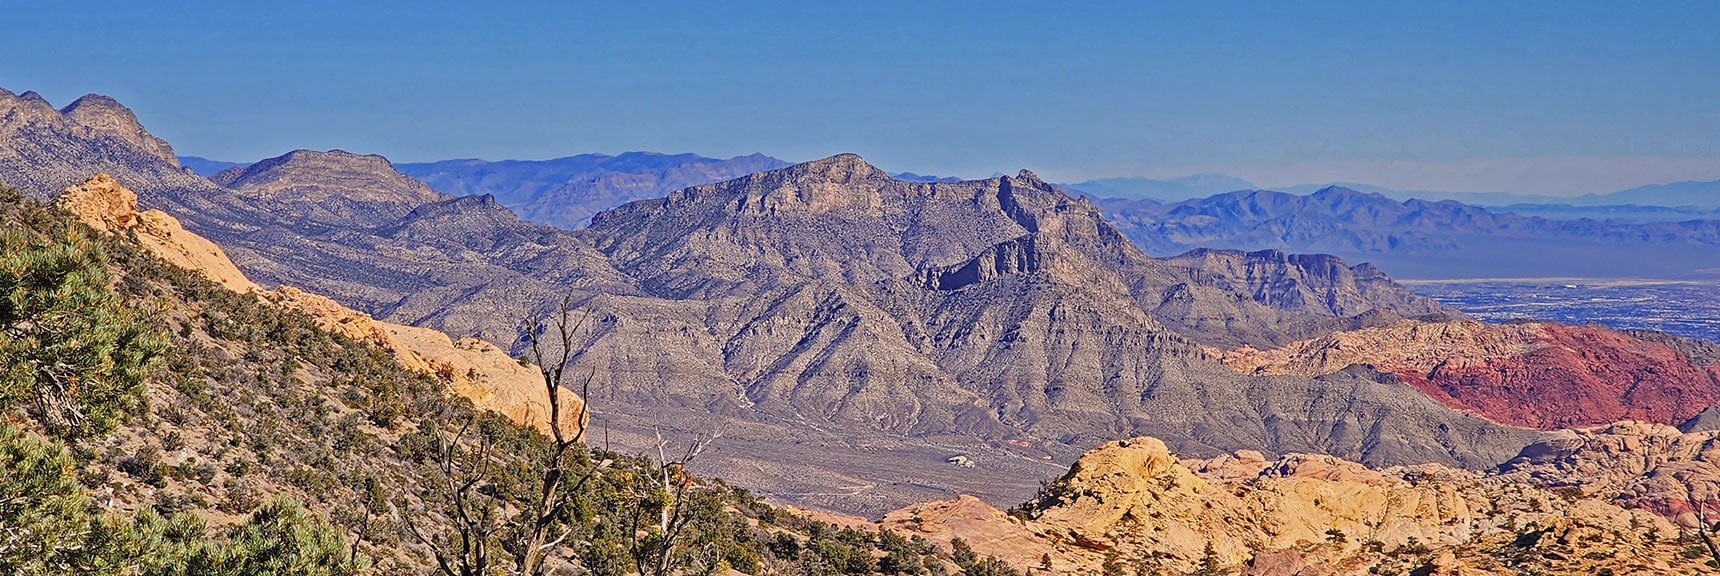 Damsel Peak and Distant Muddy Mountains Frame Red Rock Canyon. | Mid Upper Crest Ridgeline | Rainbow Mountain Wilderness, Nevada